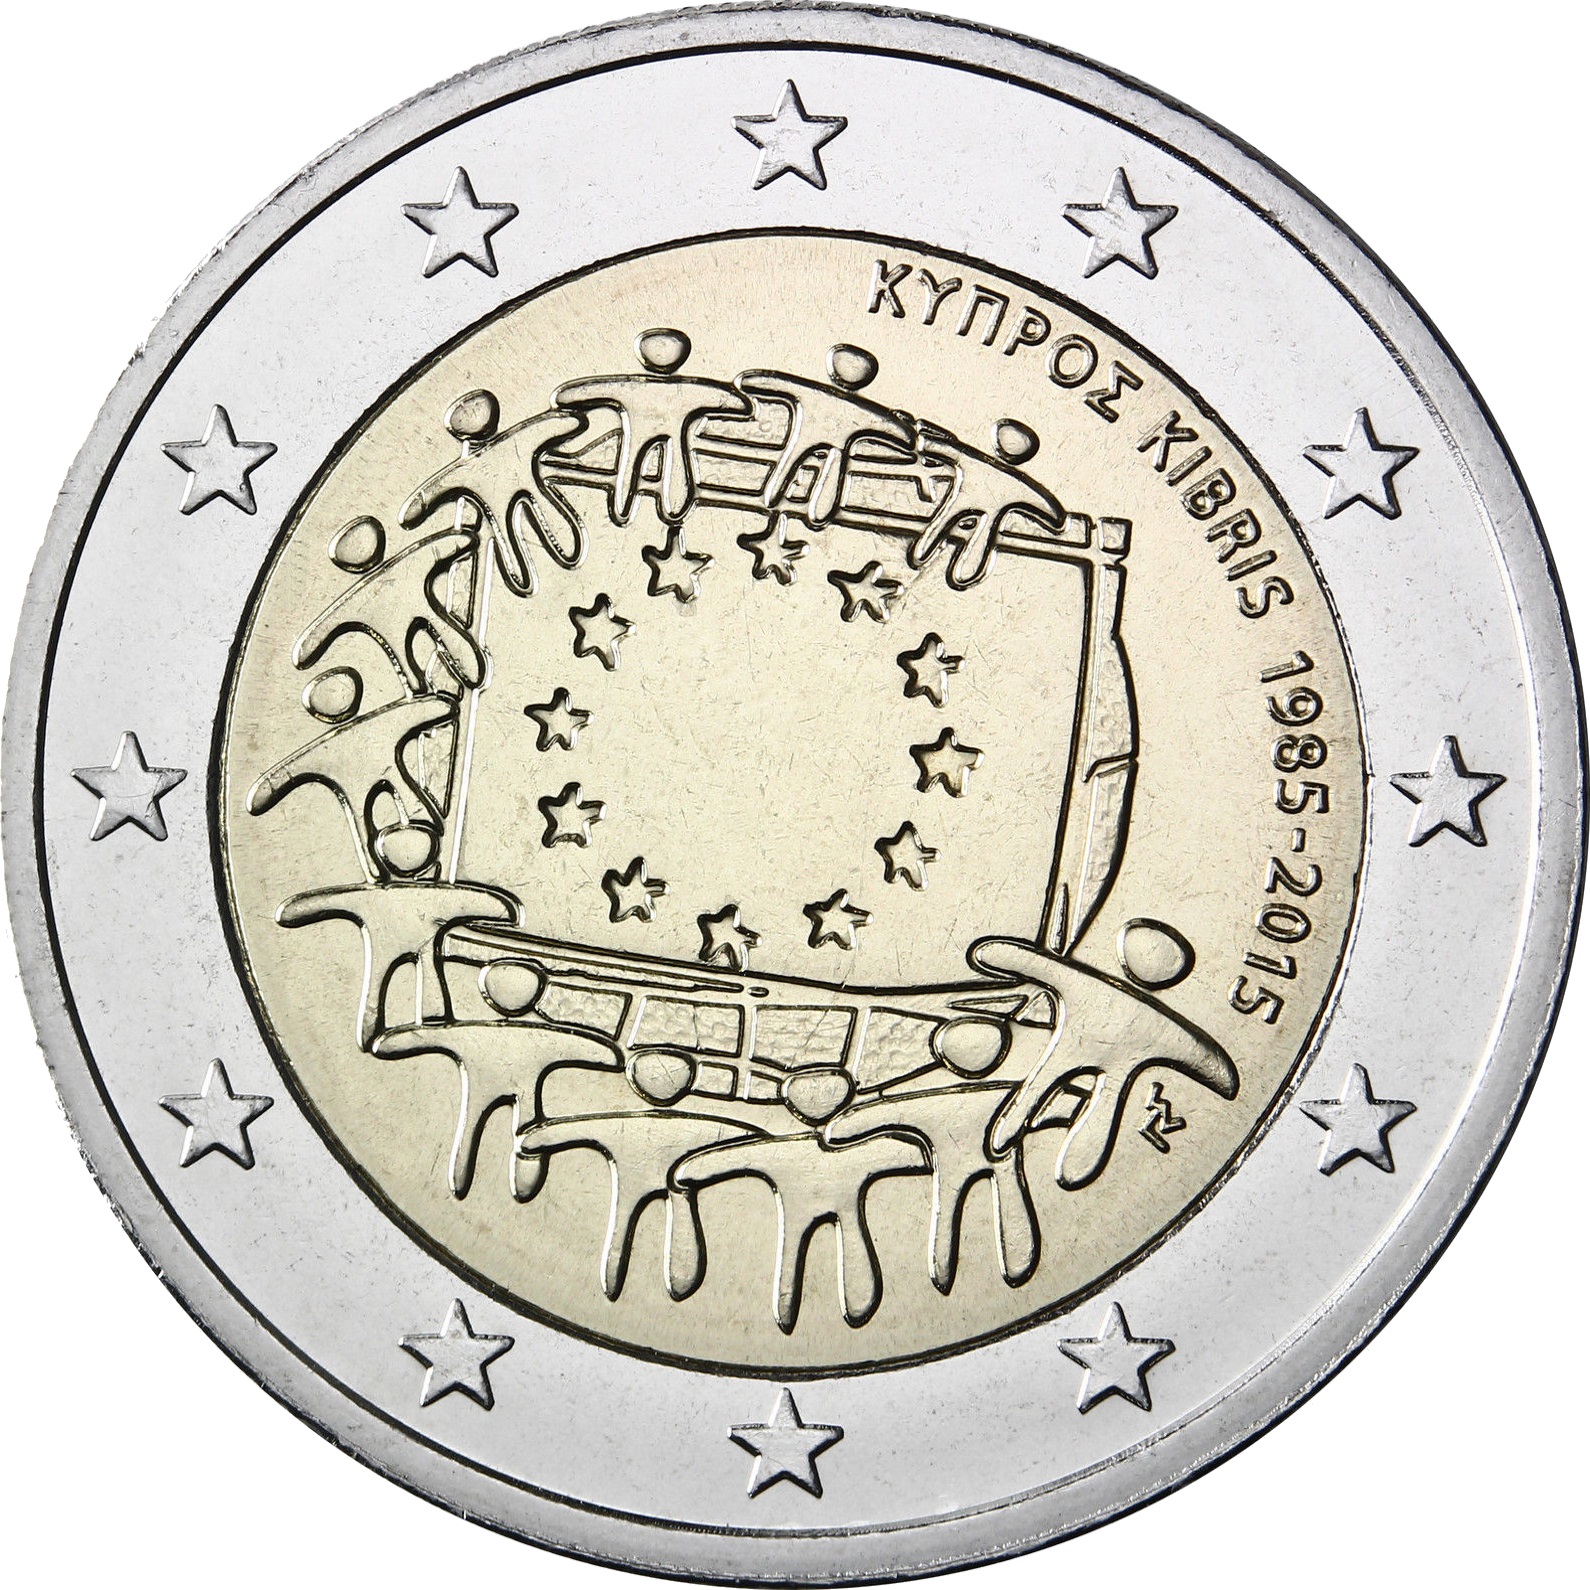 Slovenia 2 euro coin 2015 /"30th anniversary of the EU flag/" UNC